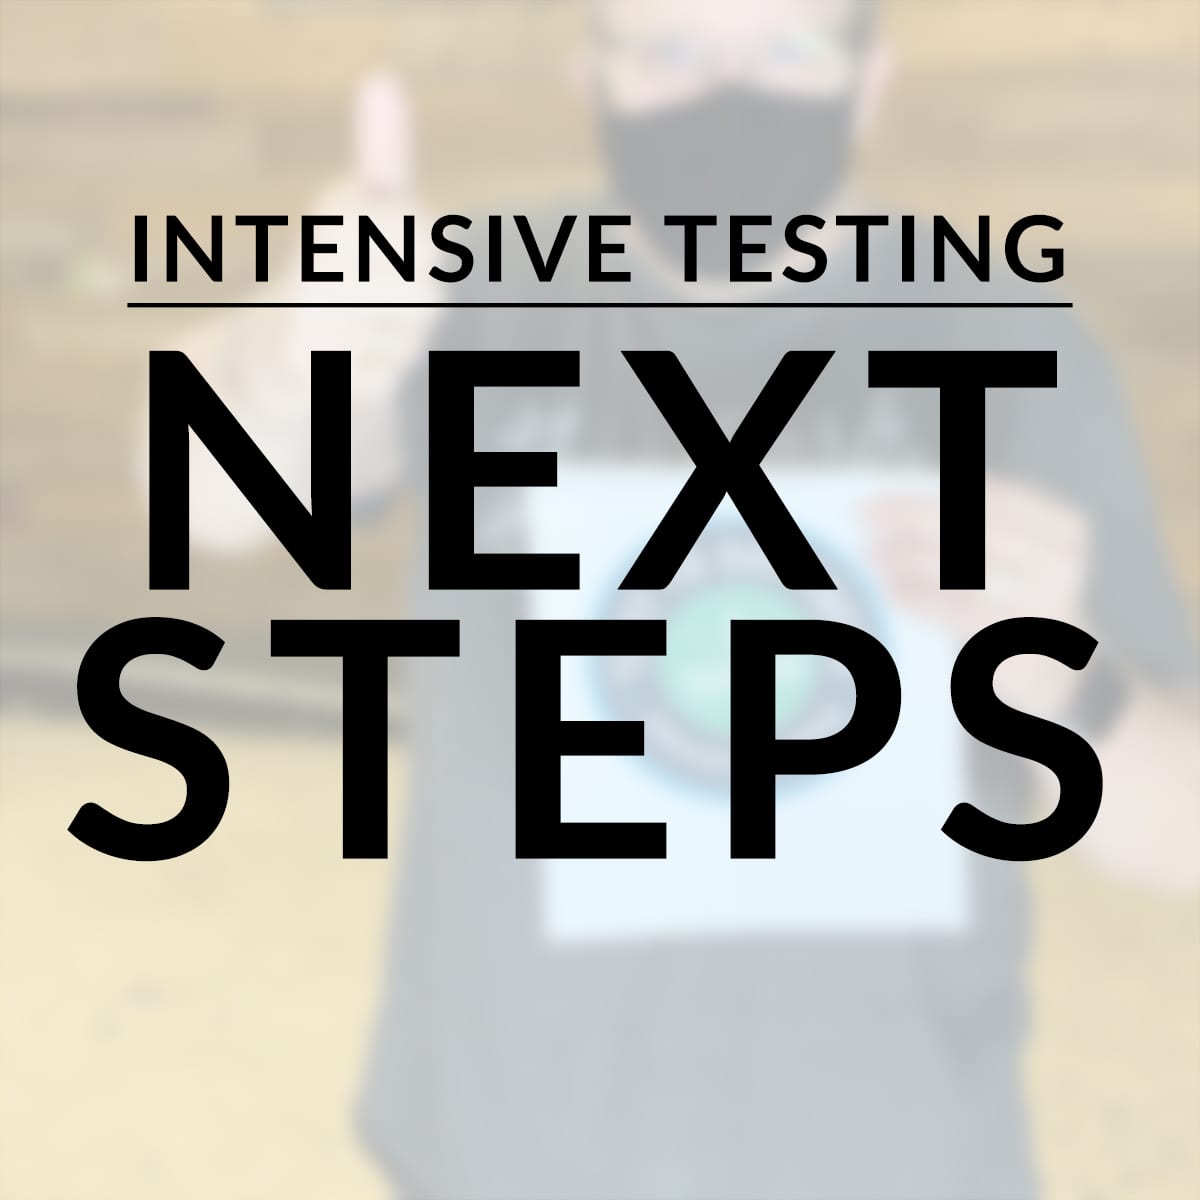 Intesive testing next steps